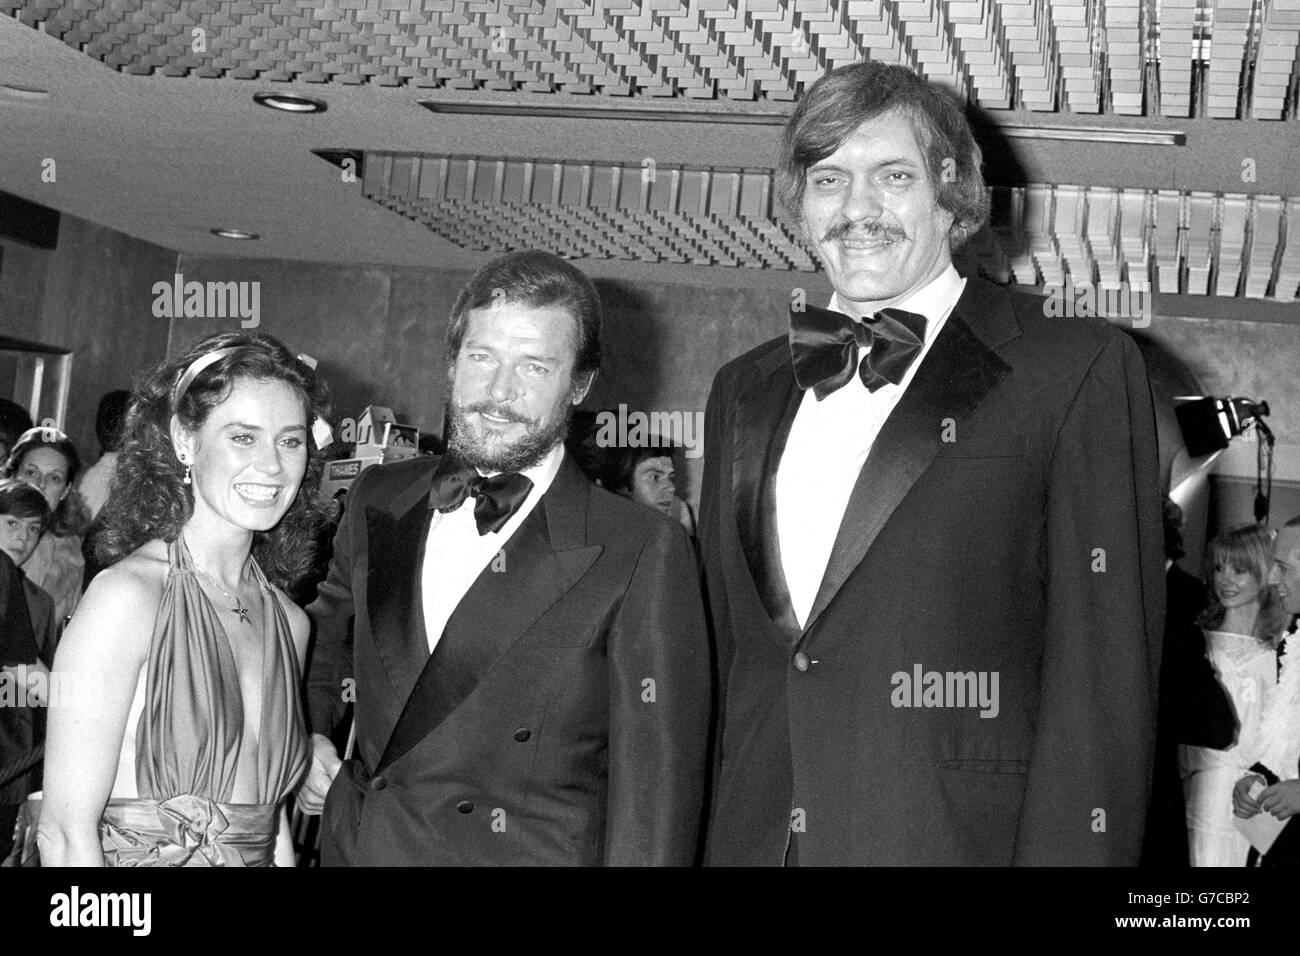 Roger Moore (centre) and Richard Kiel at the Royal Charity World Premiere of the James Bond film Moonraker. Stock Photo